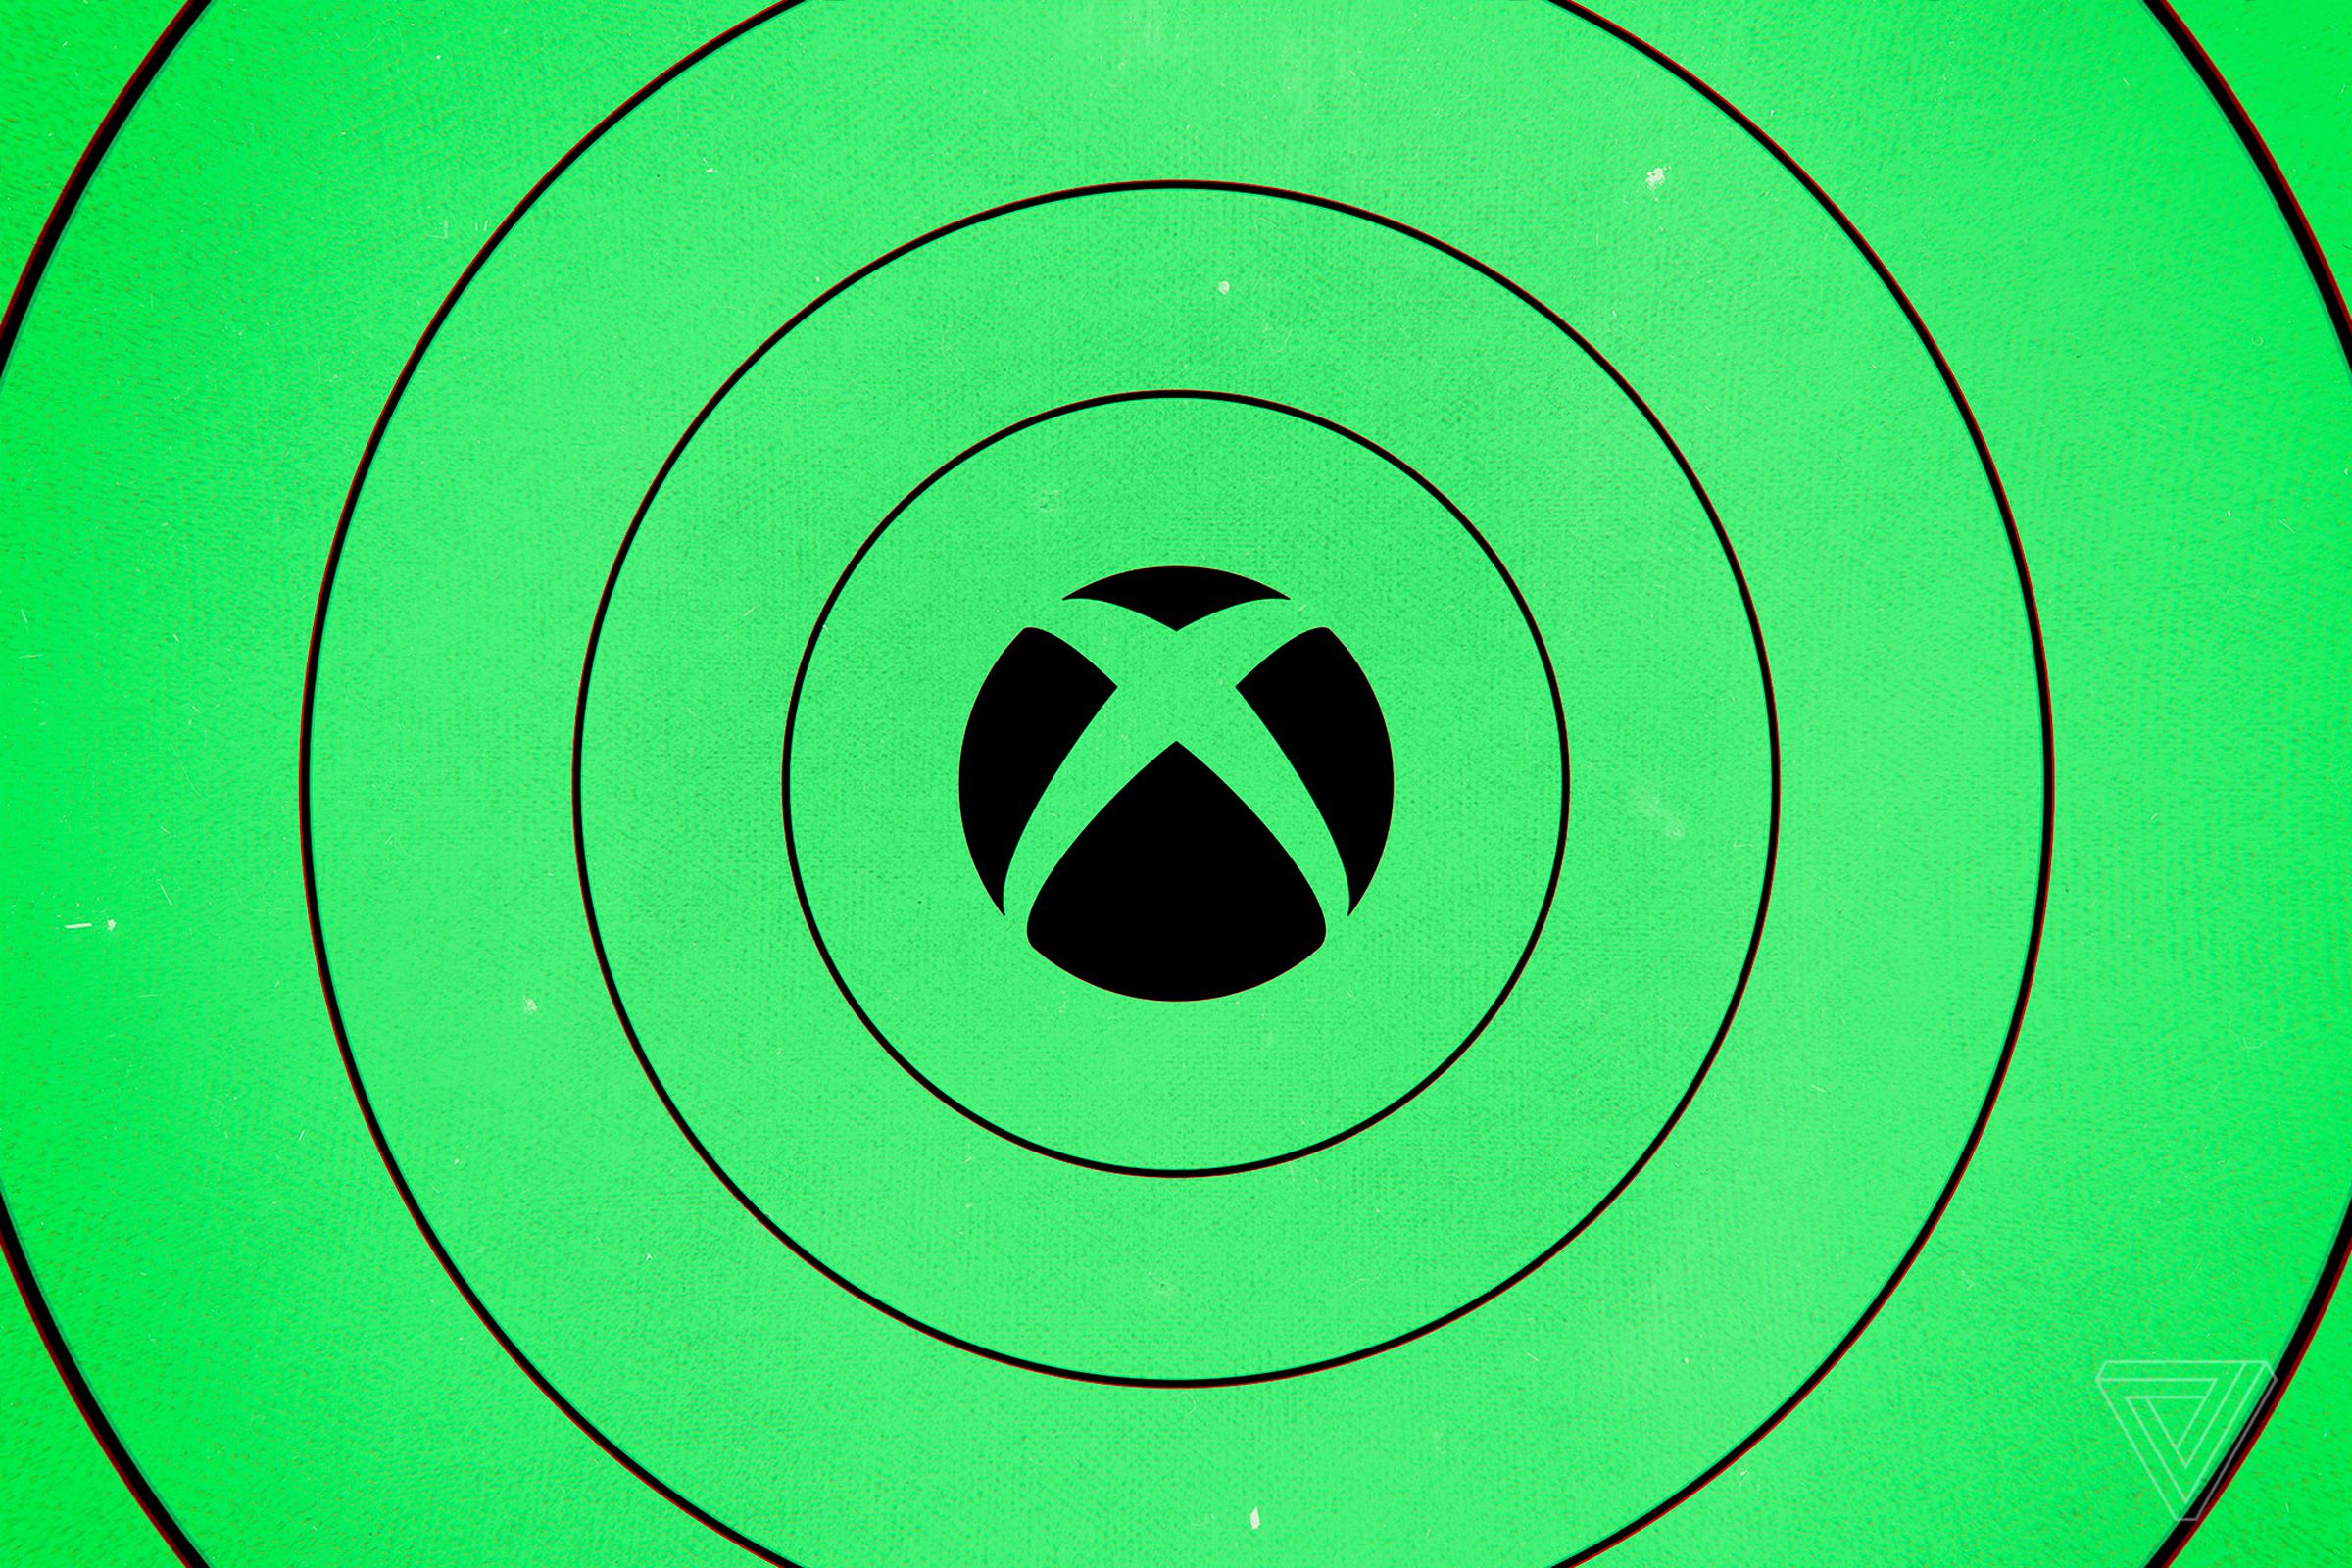 The Xbox logo